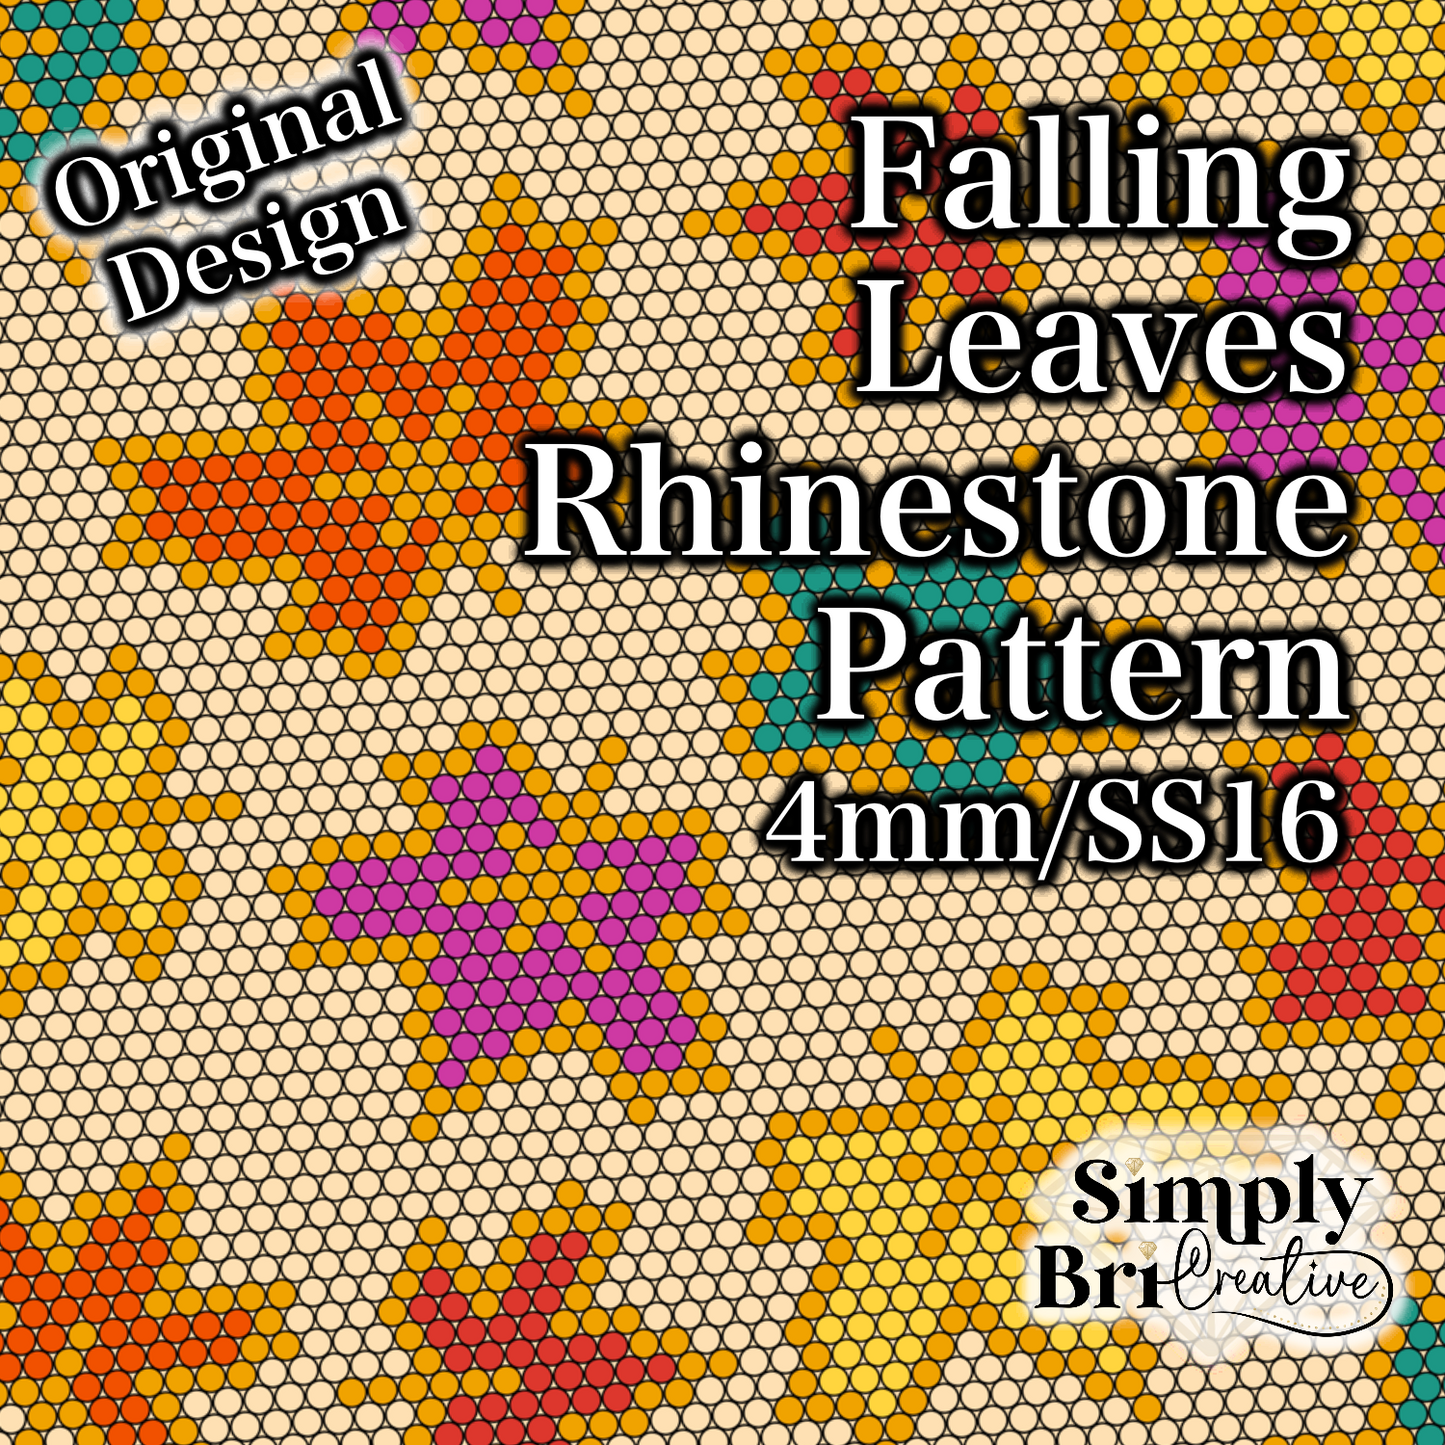 Falling Leaves Rhinestone Pattern (4mm/SS16)